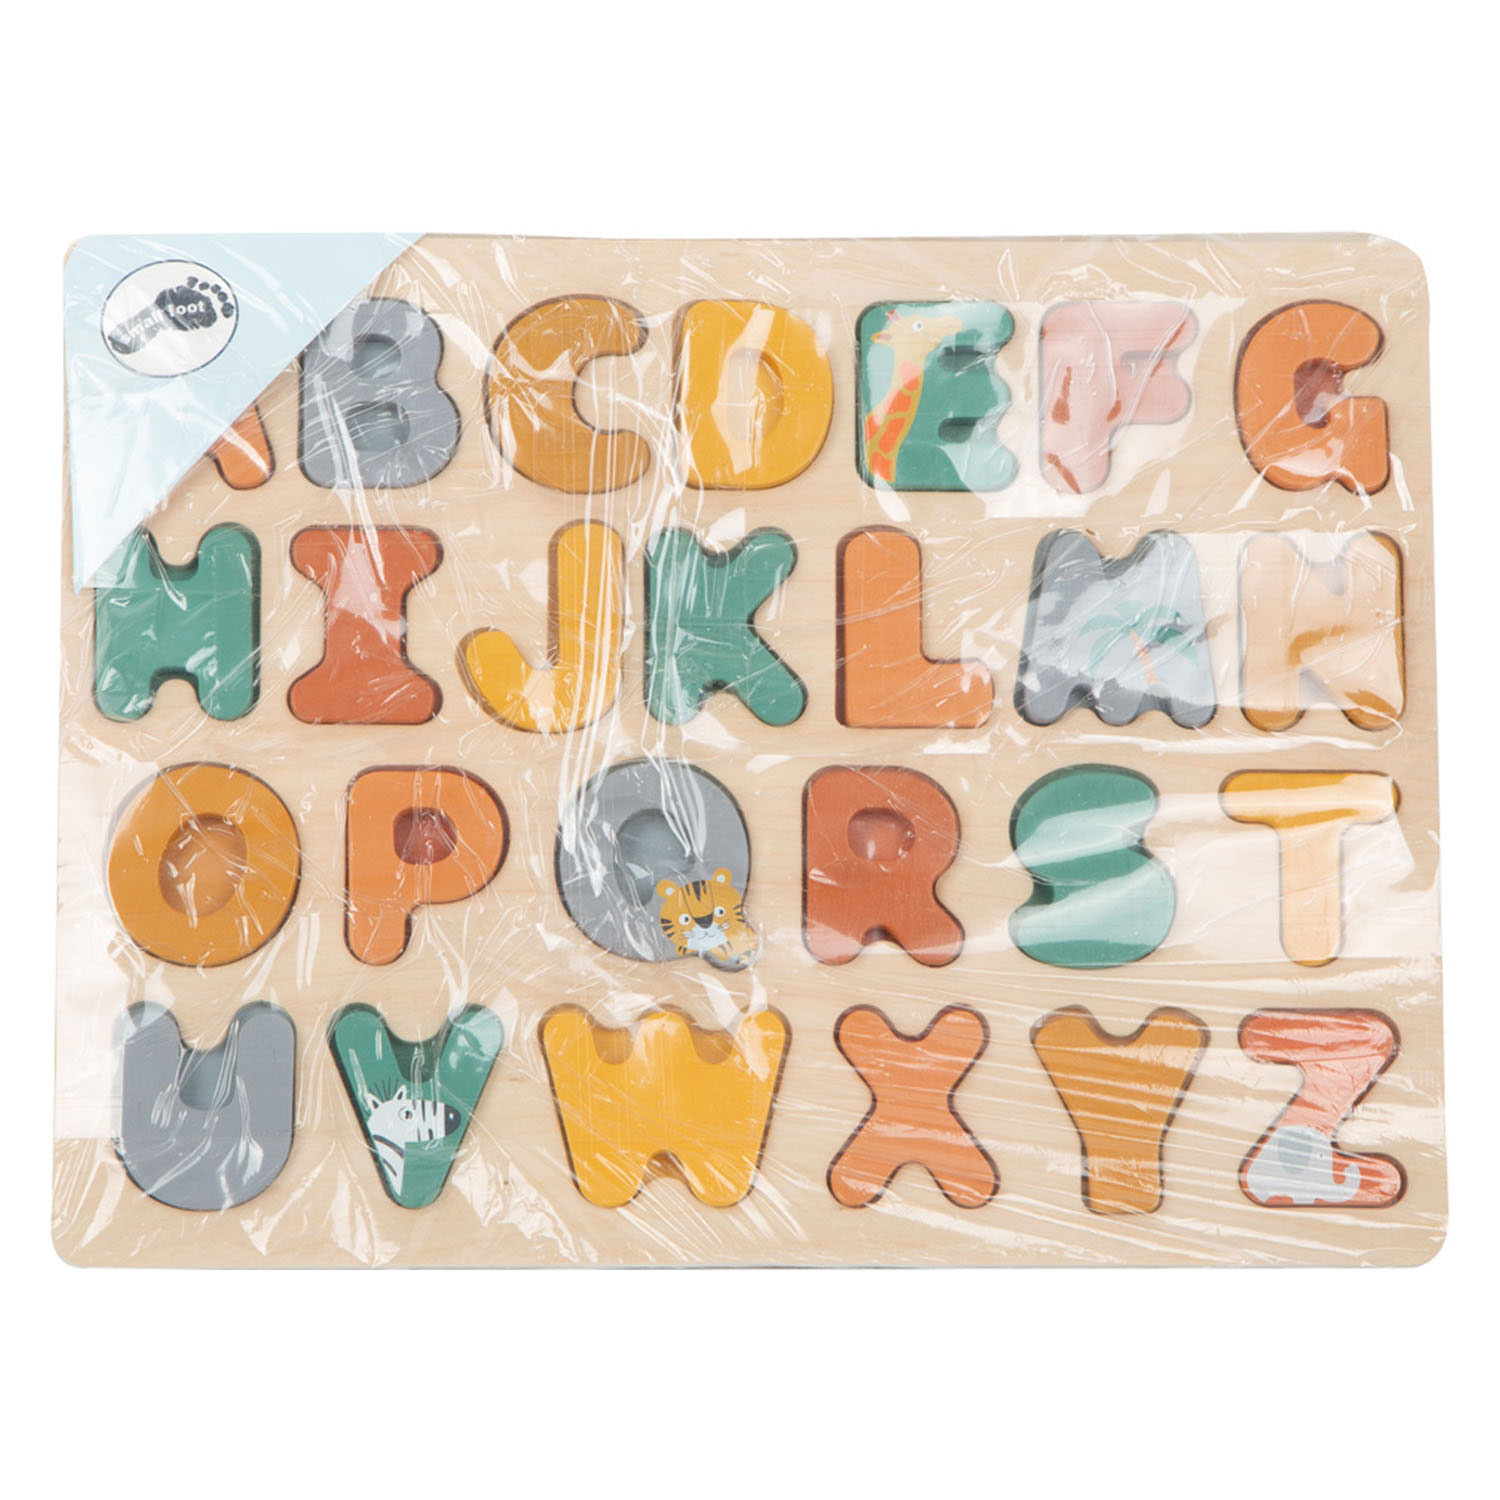 Small Foot - Alphabet-Puzzle aus Holz Safari